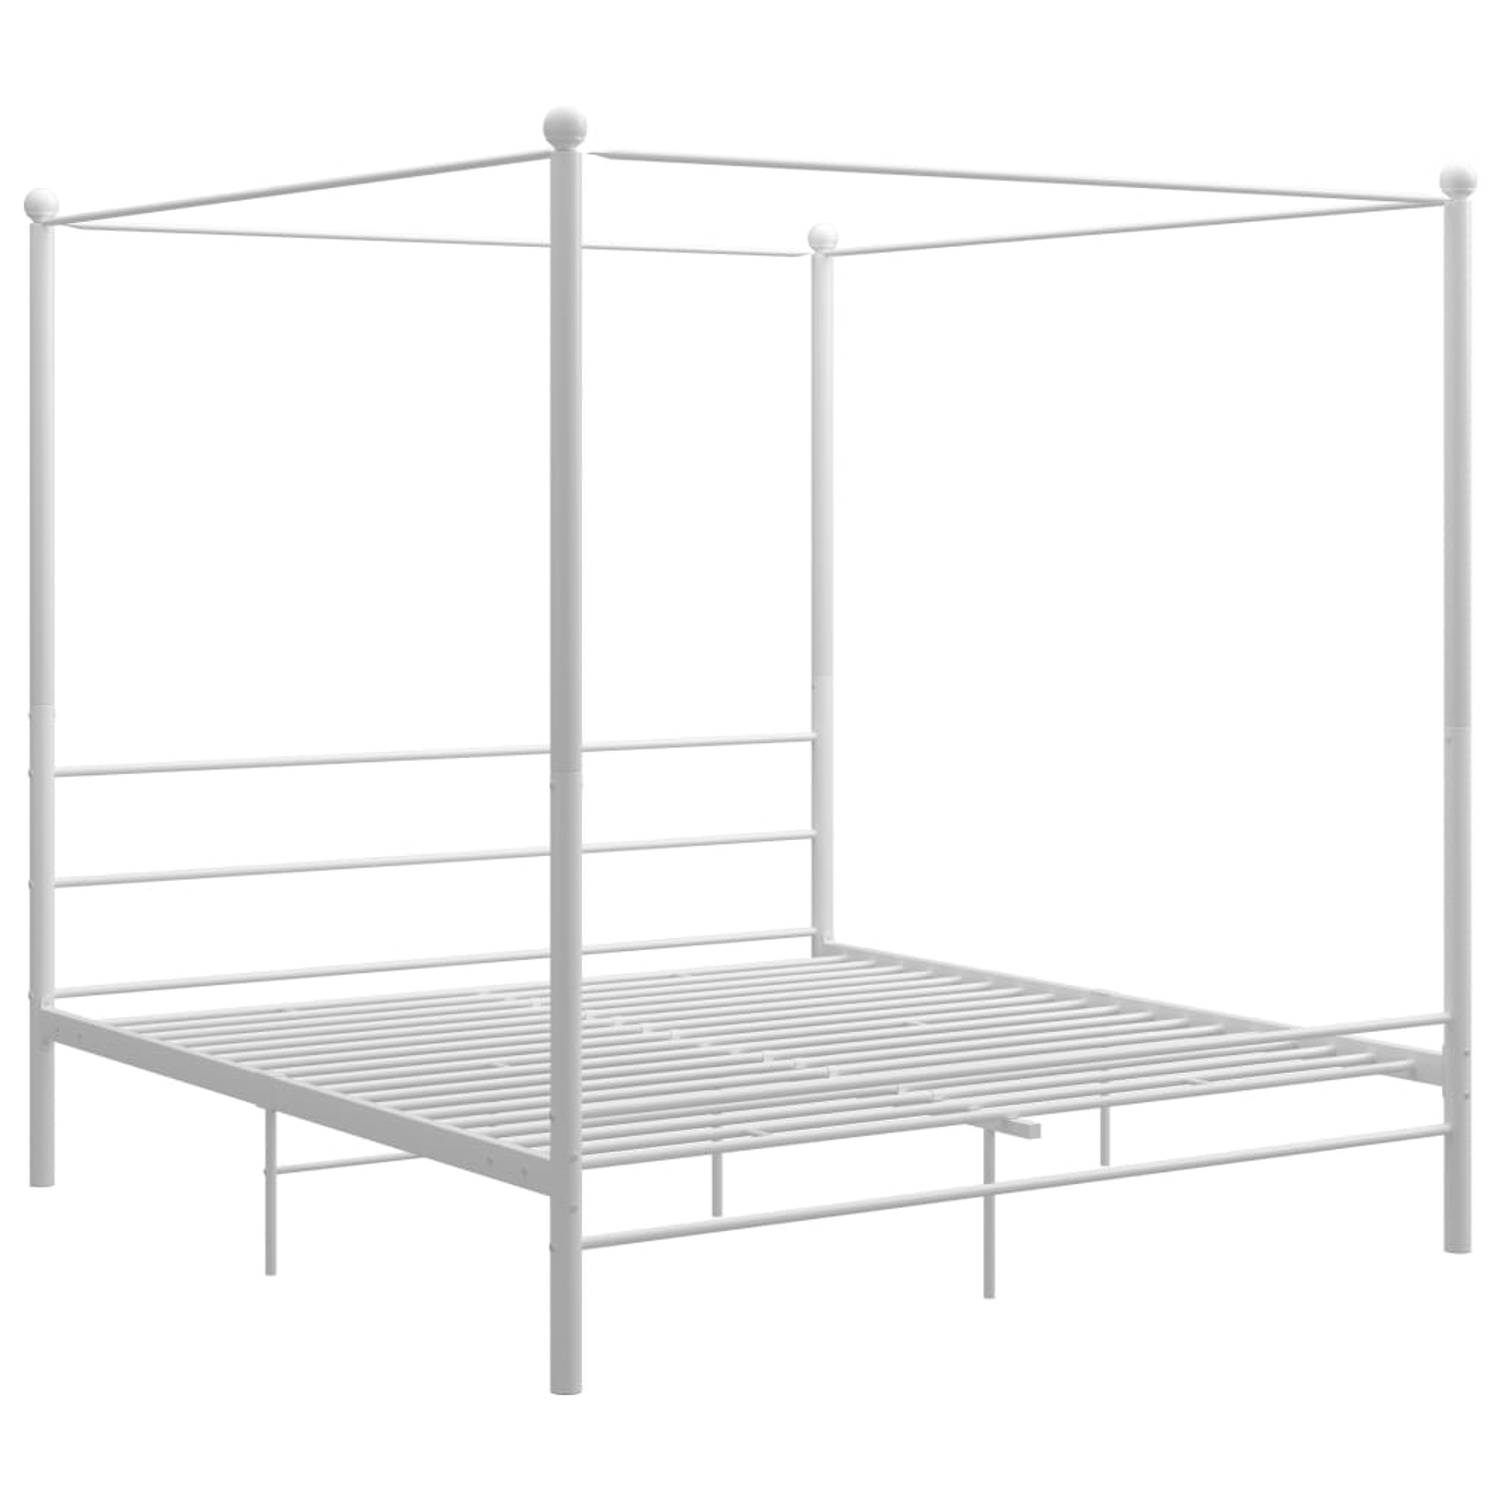 The Living Store Hemelbedframe metaal wit 180x200 cm - Bedframe - Bedframe - Bed Frame - Bed Frames - Bed - Bedden - Metalen Bedframe - Metalen Bedframes - 2-persoonsbed - 2